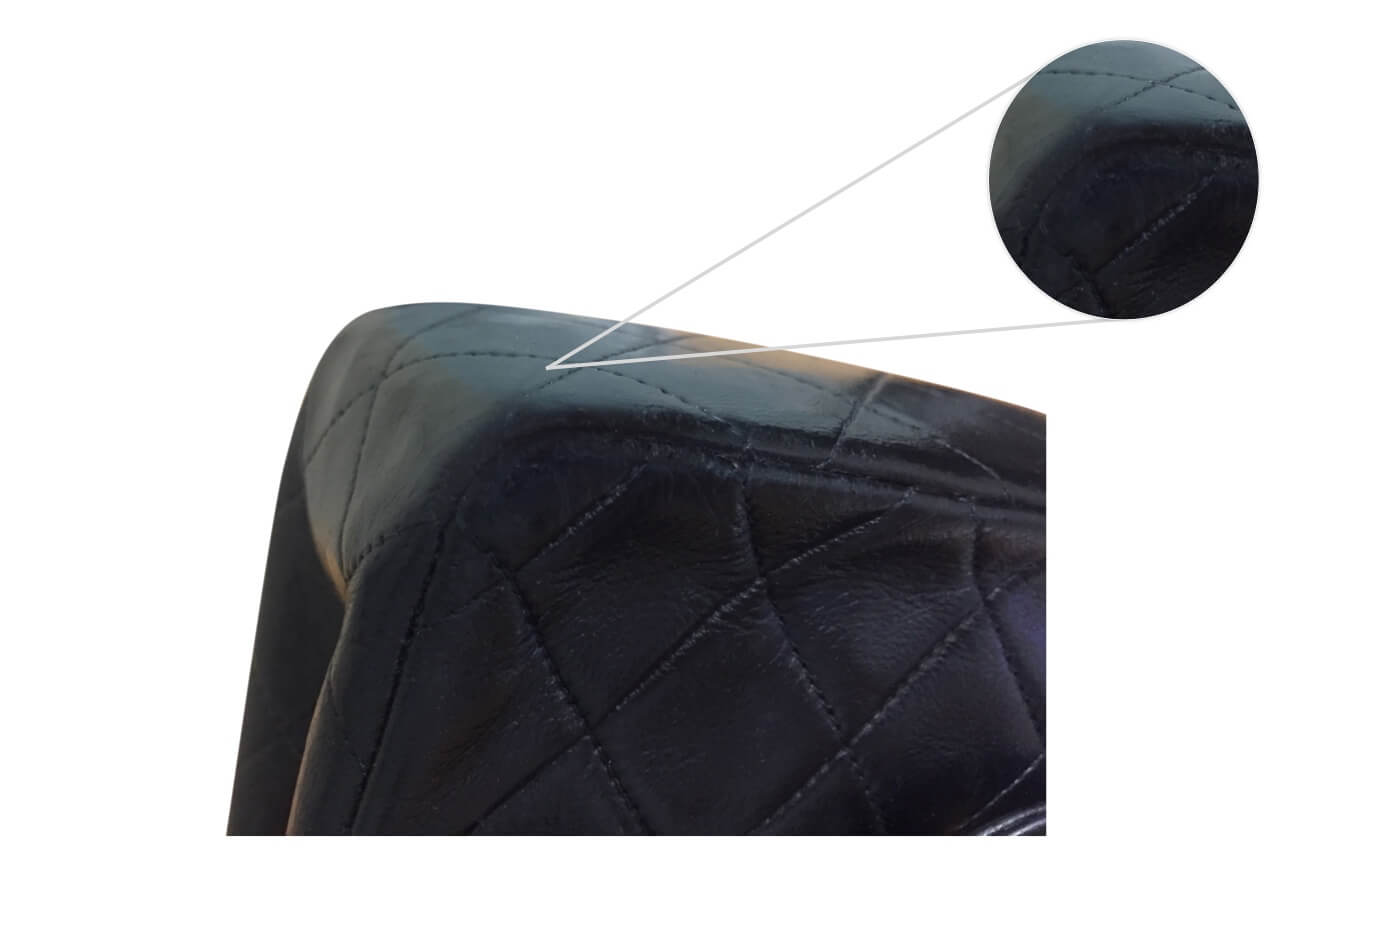 Chanel Handbag Colour Restoration — SoleHeeled